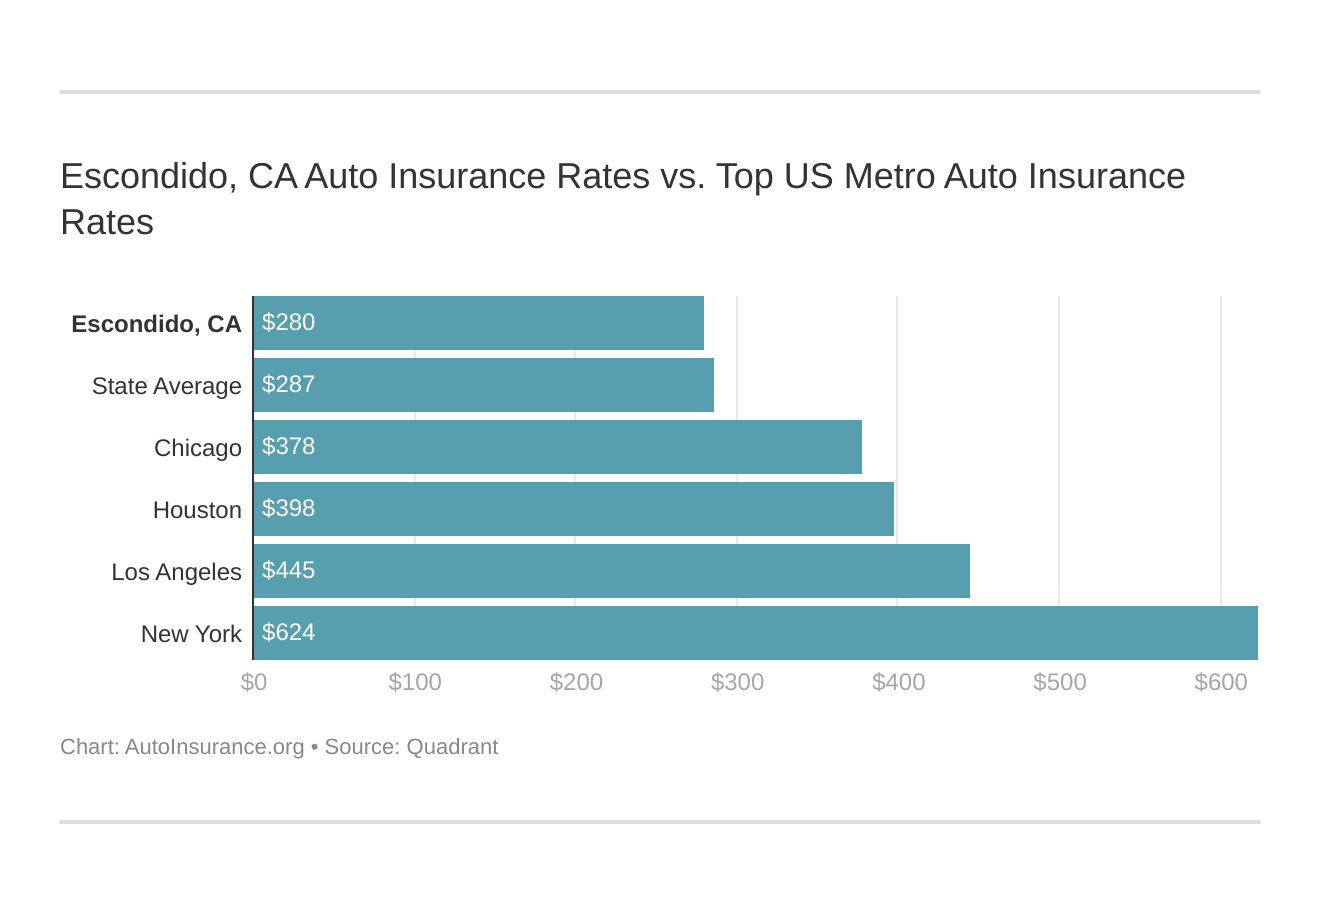 Escondido, CA Auto Insurance Rates vs. Top US Metro Auto Insurance Rates